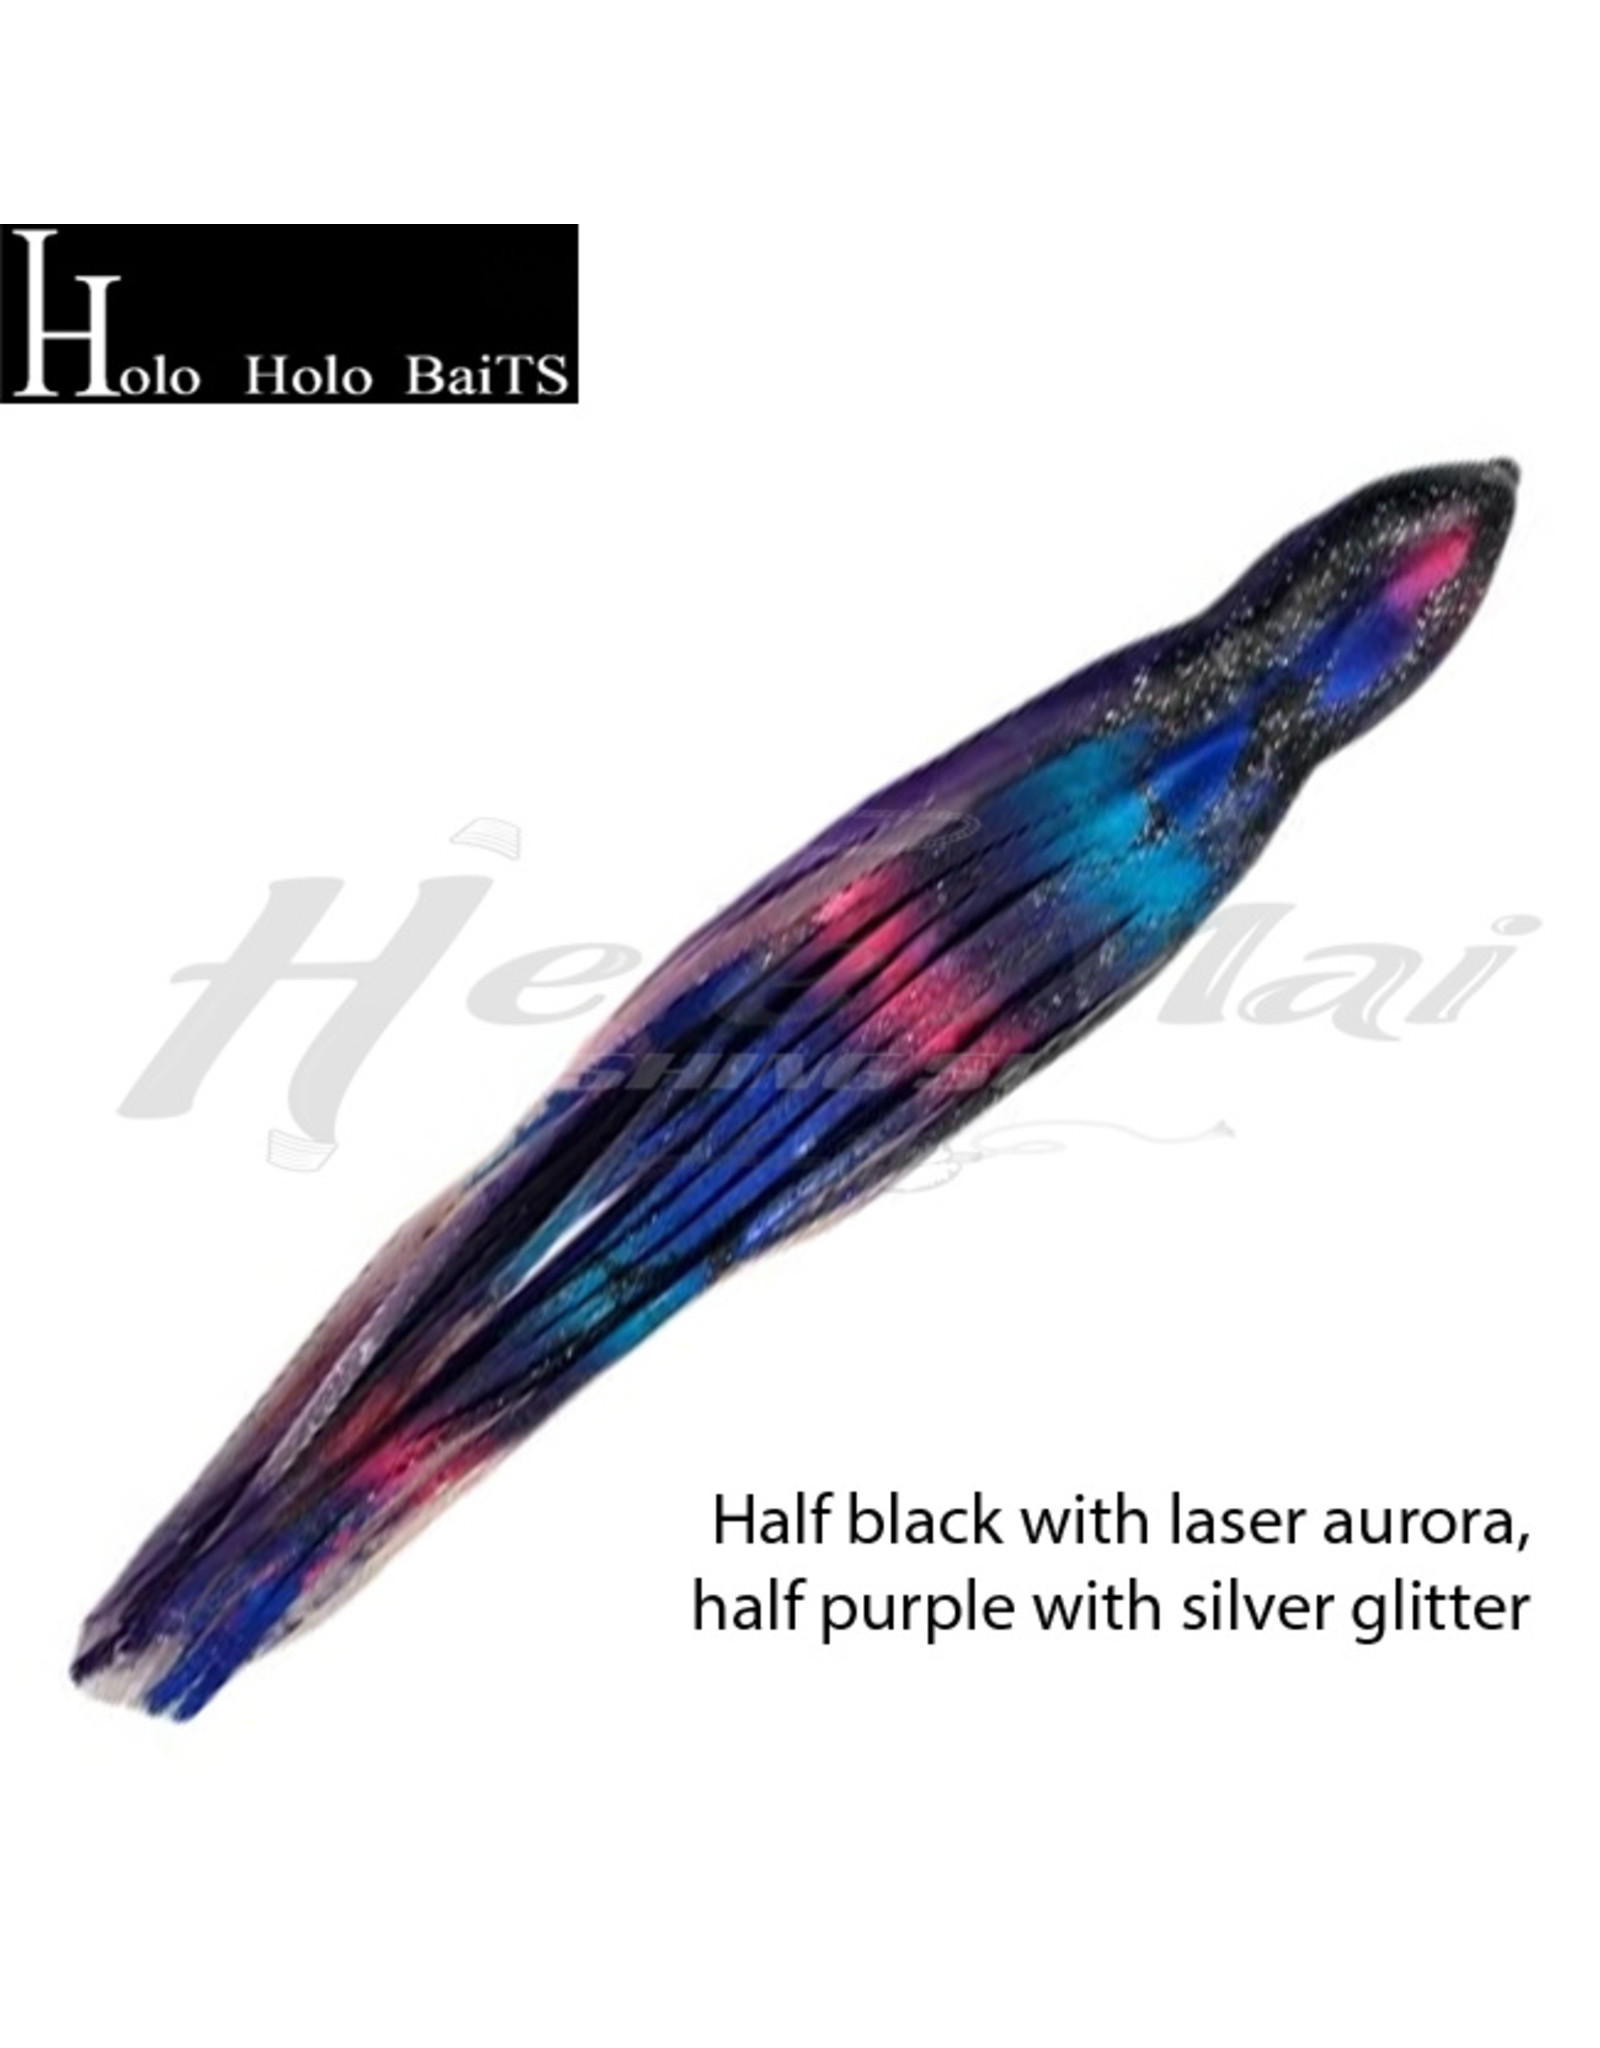 HOLO HOLO HAWAII (HHH) HH, 7" SQUID SKIRT RAINBOW BARS BLACK BLUE 0712